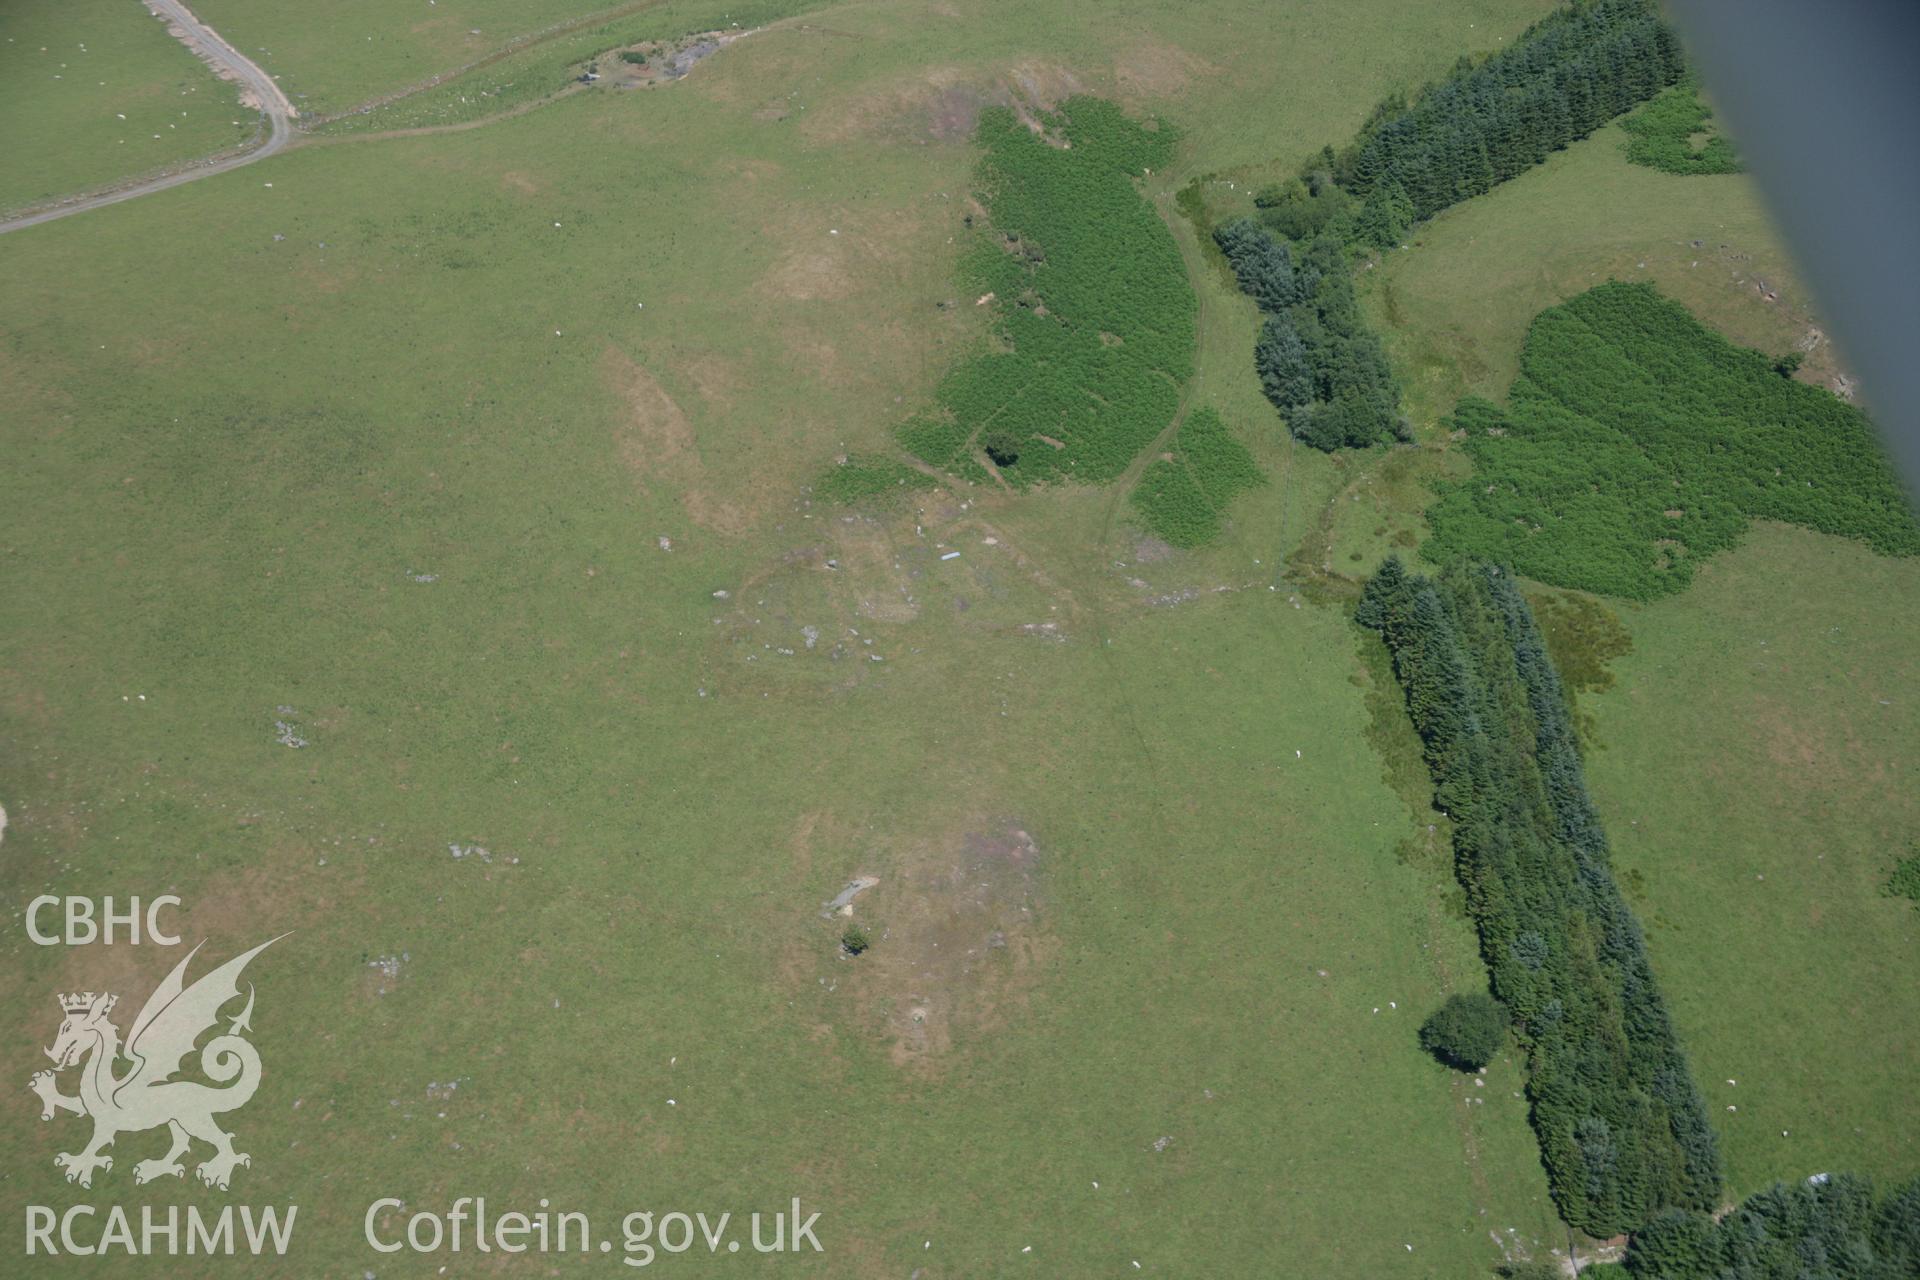 RCAHMW colour oblique aerial photograph of Penlandoppa Farmstead, Troed y Rhiw. Taken on 17 July 2006 by Toby Driver.